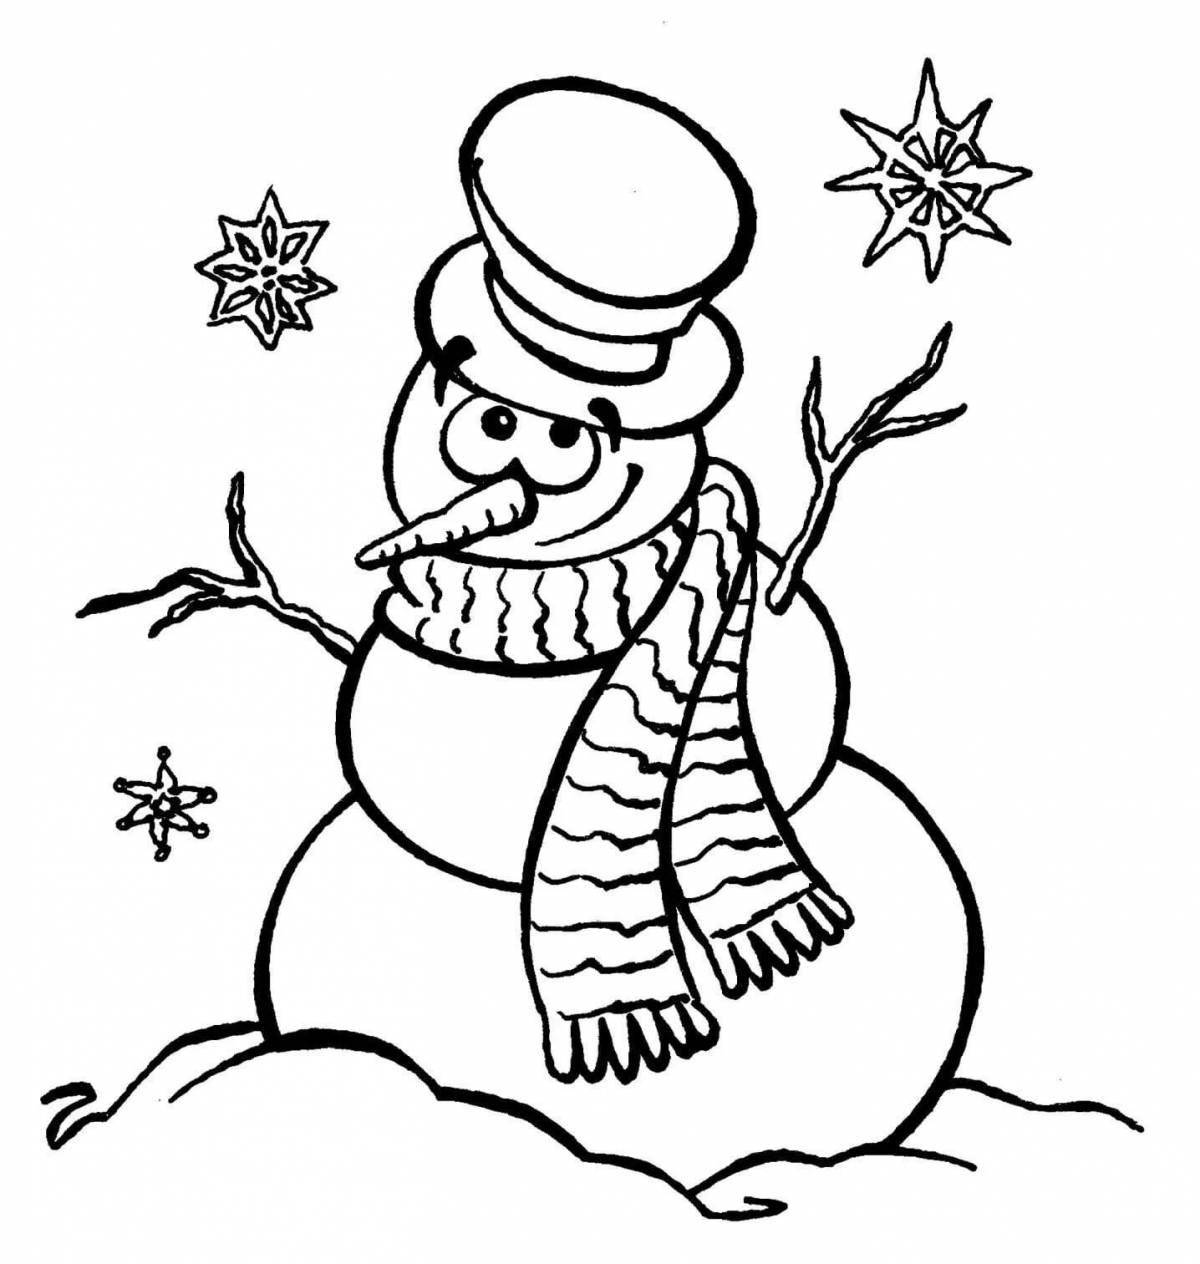 Rampant Christmas snowman coloring page